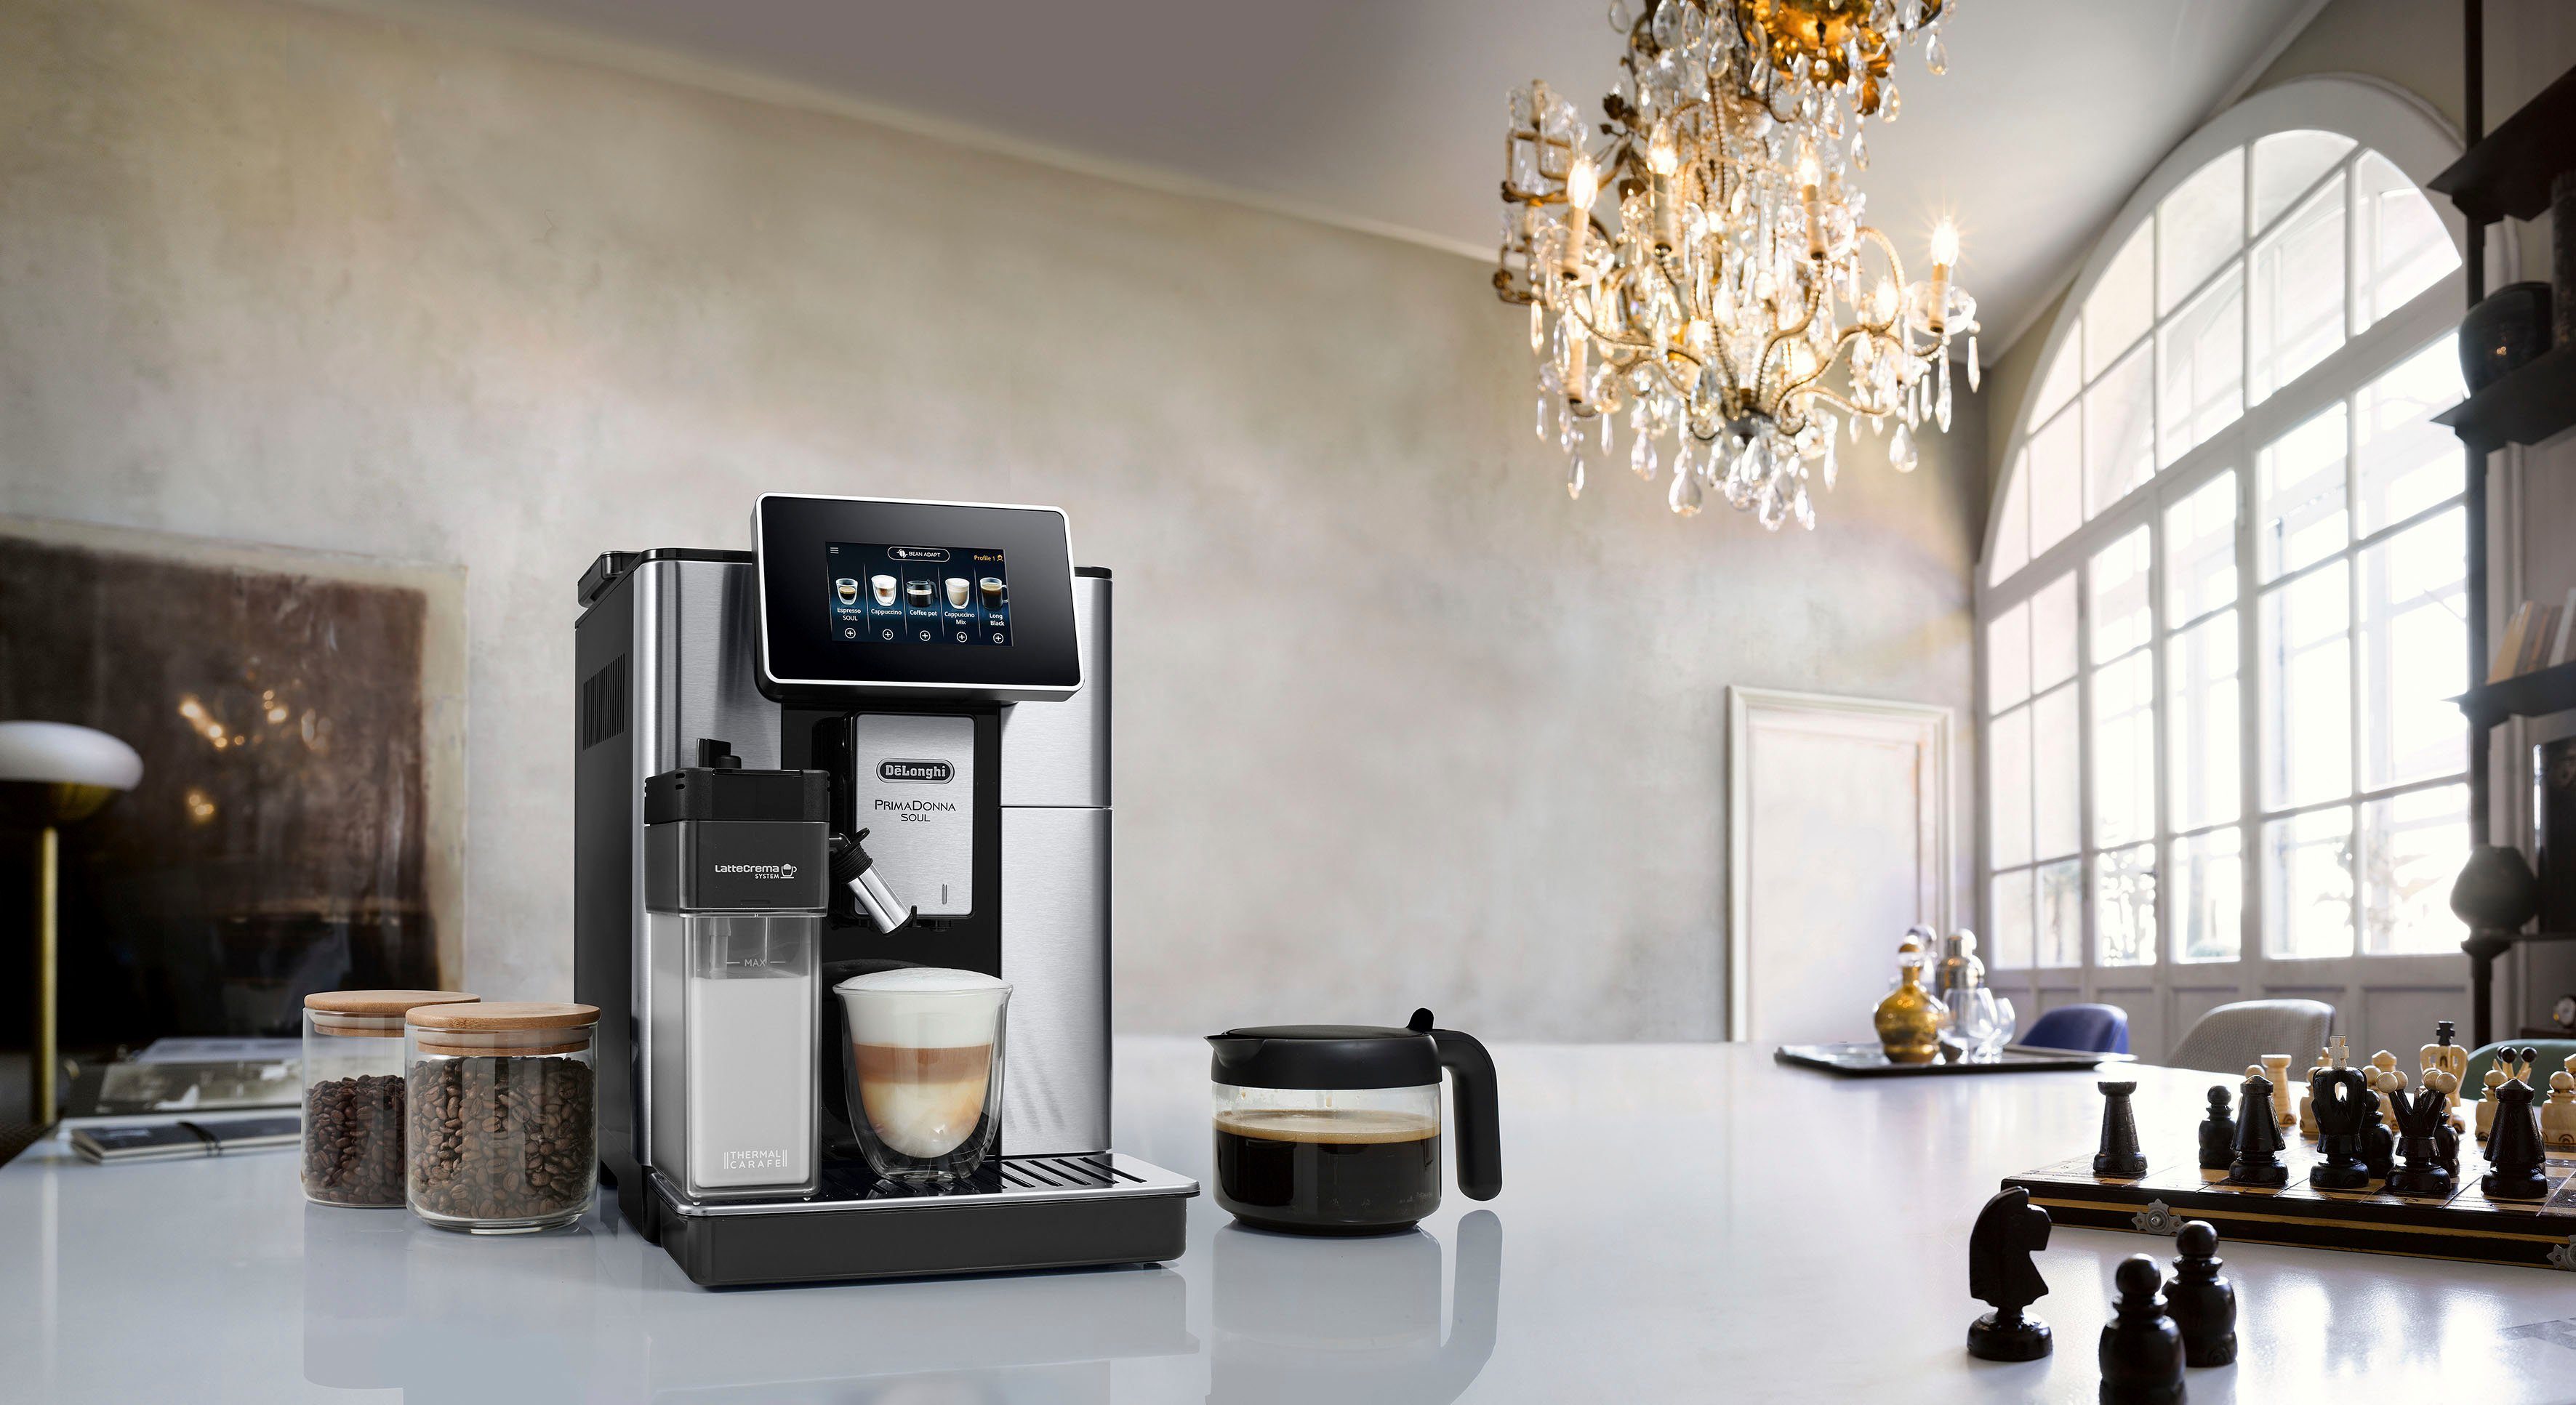 De'Longhi Kaffeevollautomat PrimaDonna Soul ECAM Kaffeekanne UVP € von UVP Wert 46,90 Gläser-Set im 610.75.MB, + 29,99 inkl. €